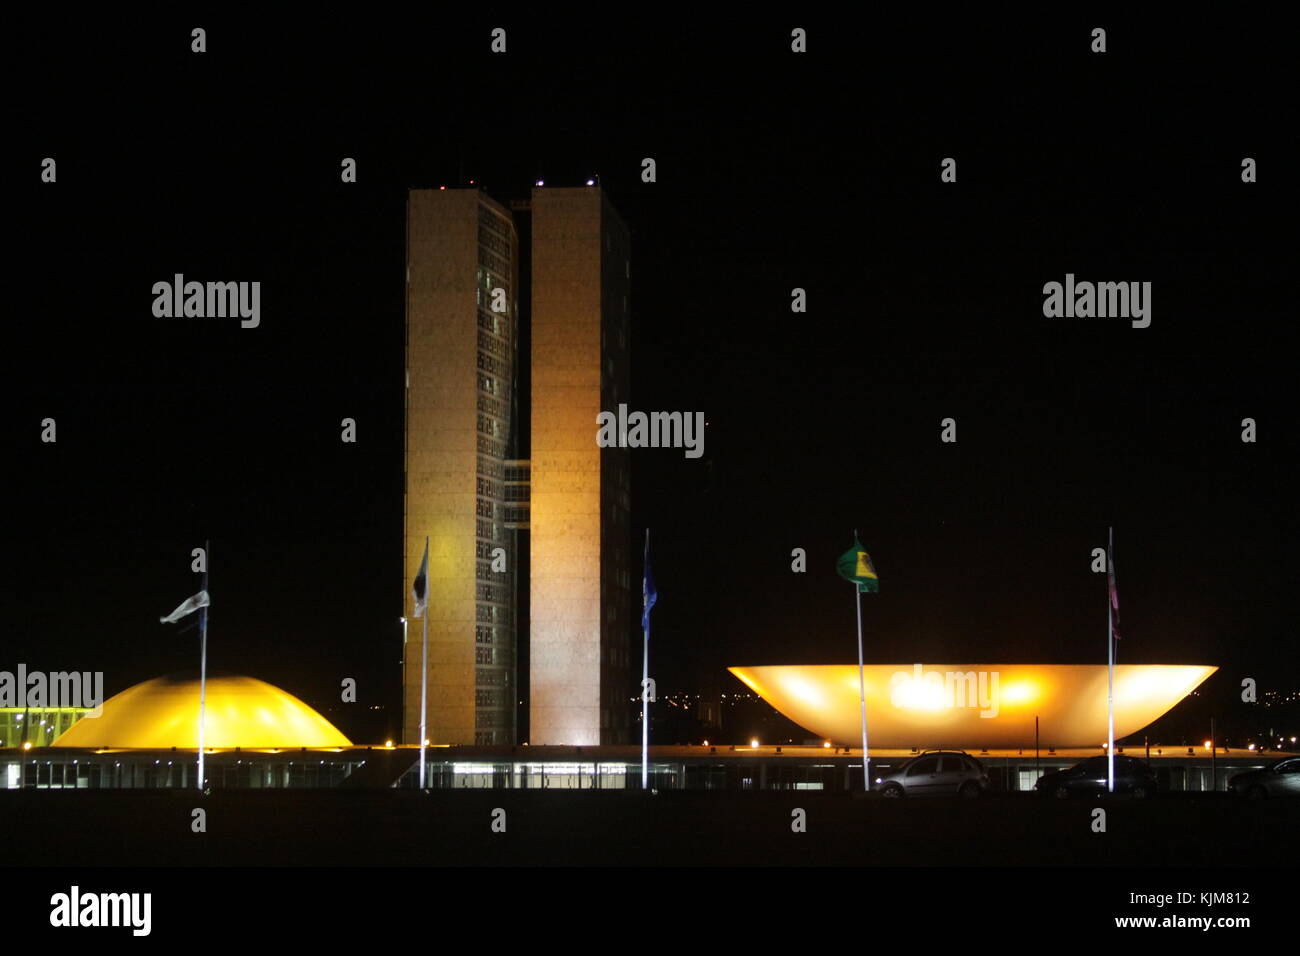 Praça dos Três Poderes - Brasília Stock Photo